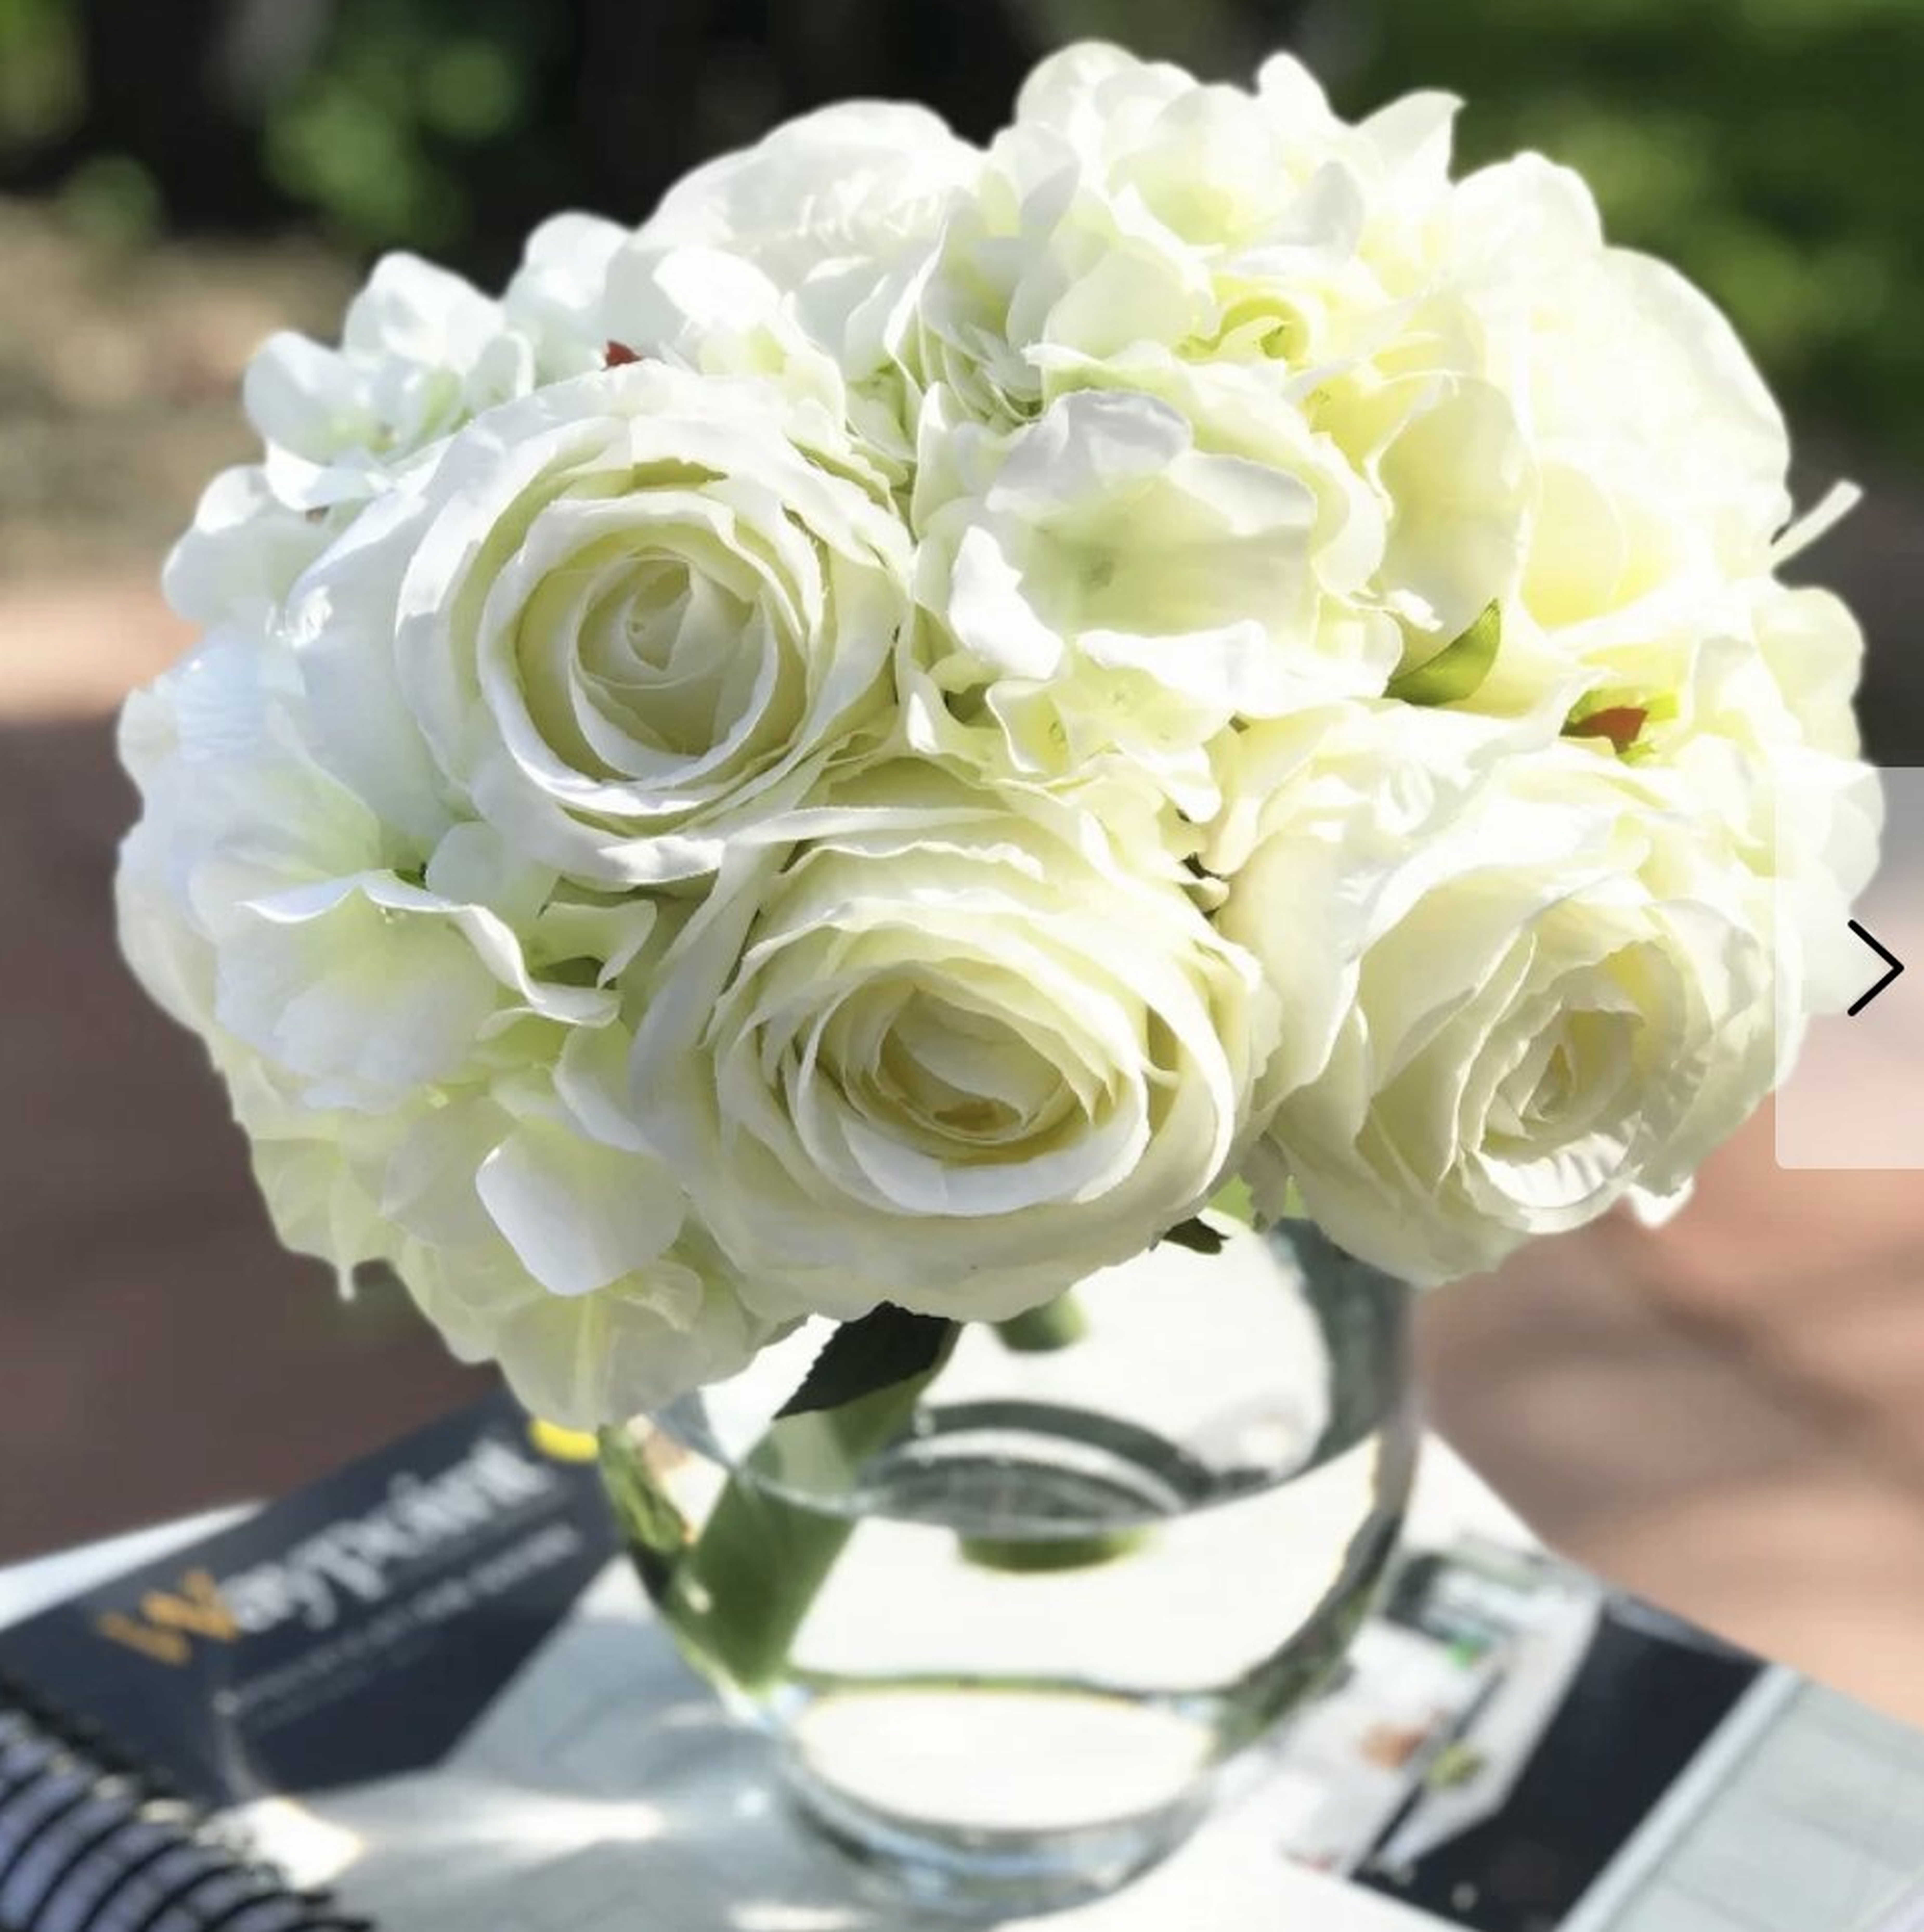 Artificial Rose and Hydrangea Floral Arrangement and Centerpiece in Vase - Wayfair